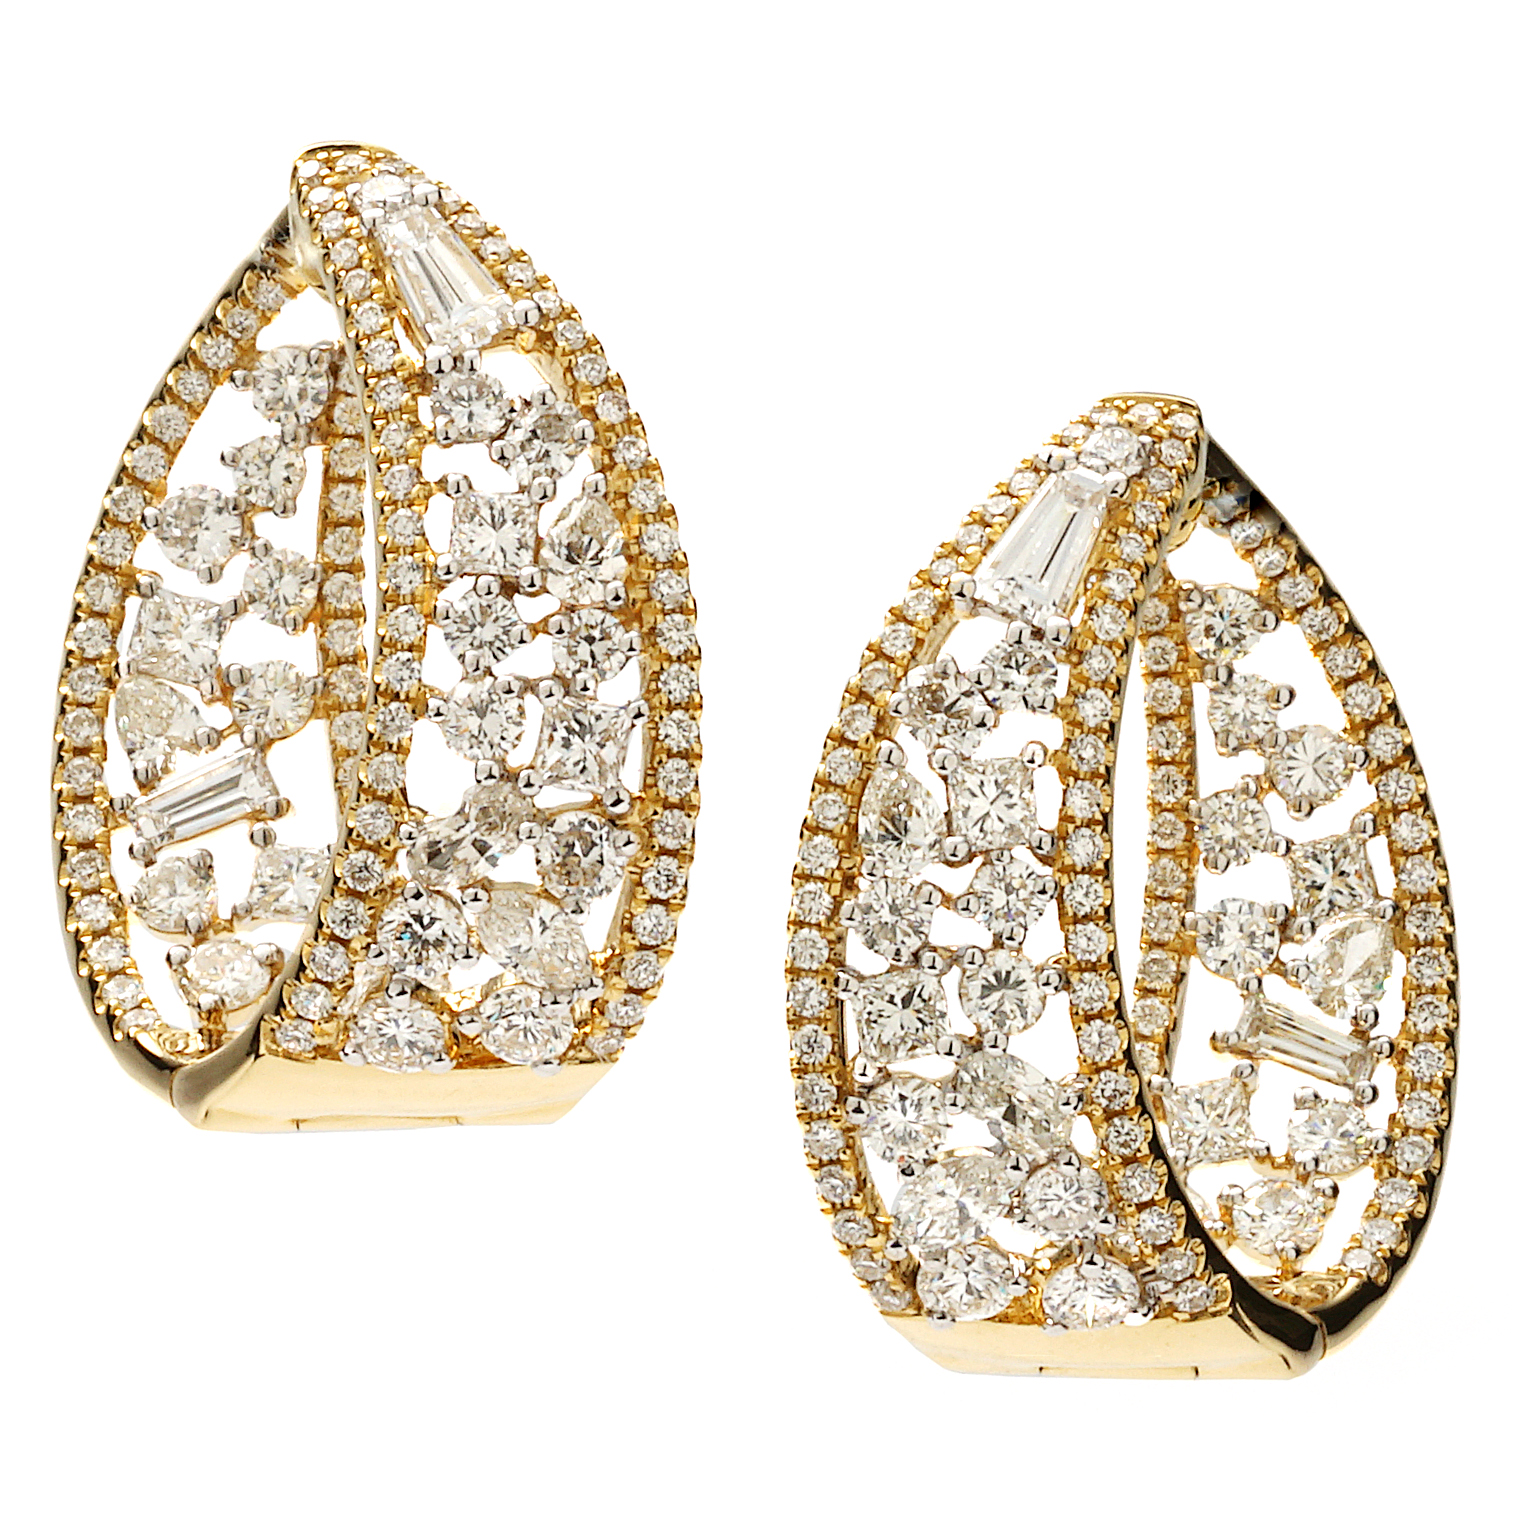 Mixed Shaped Inside Outside Fancy Hoop Earrings | New York Jewelers Chicago